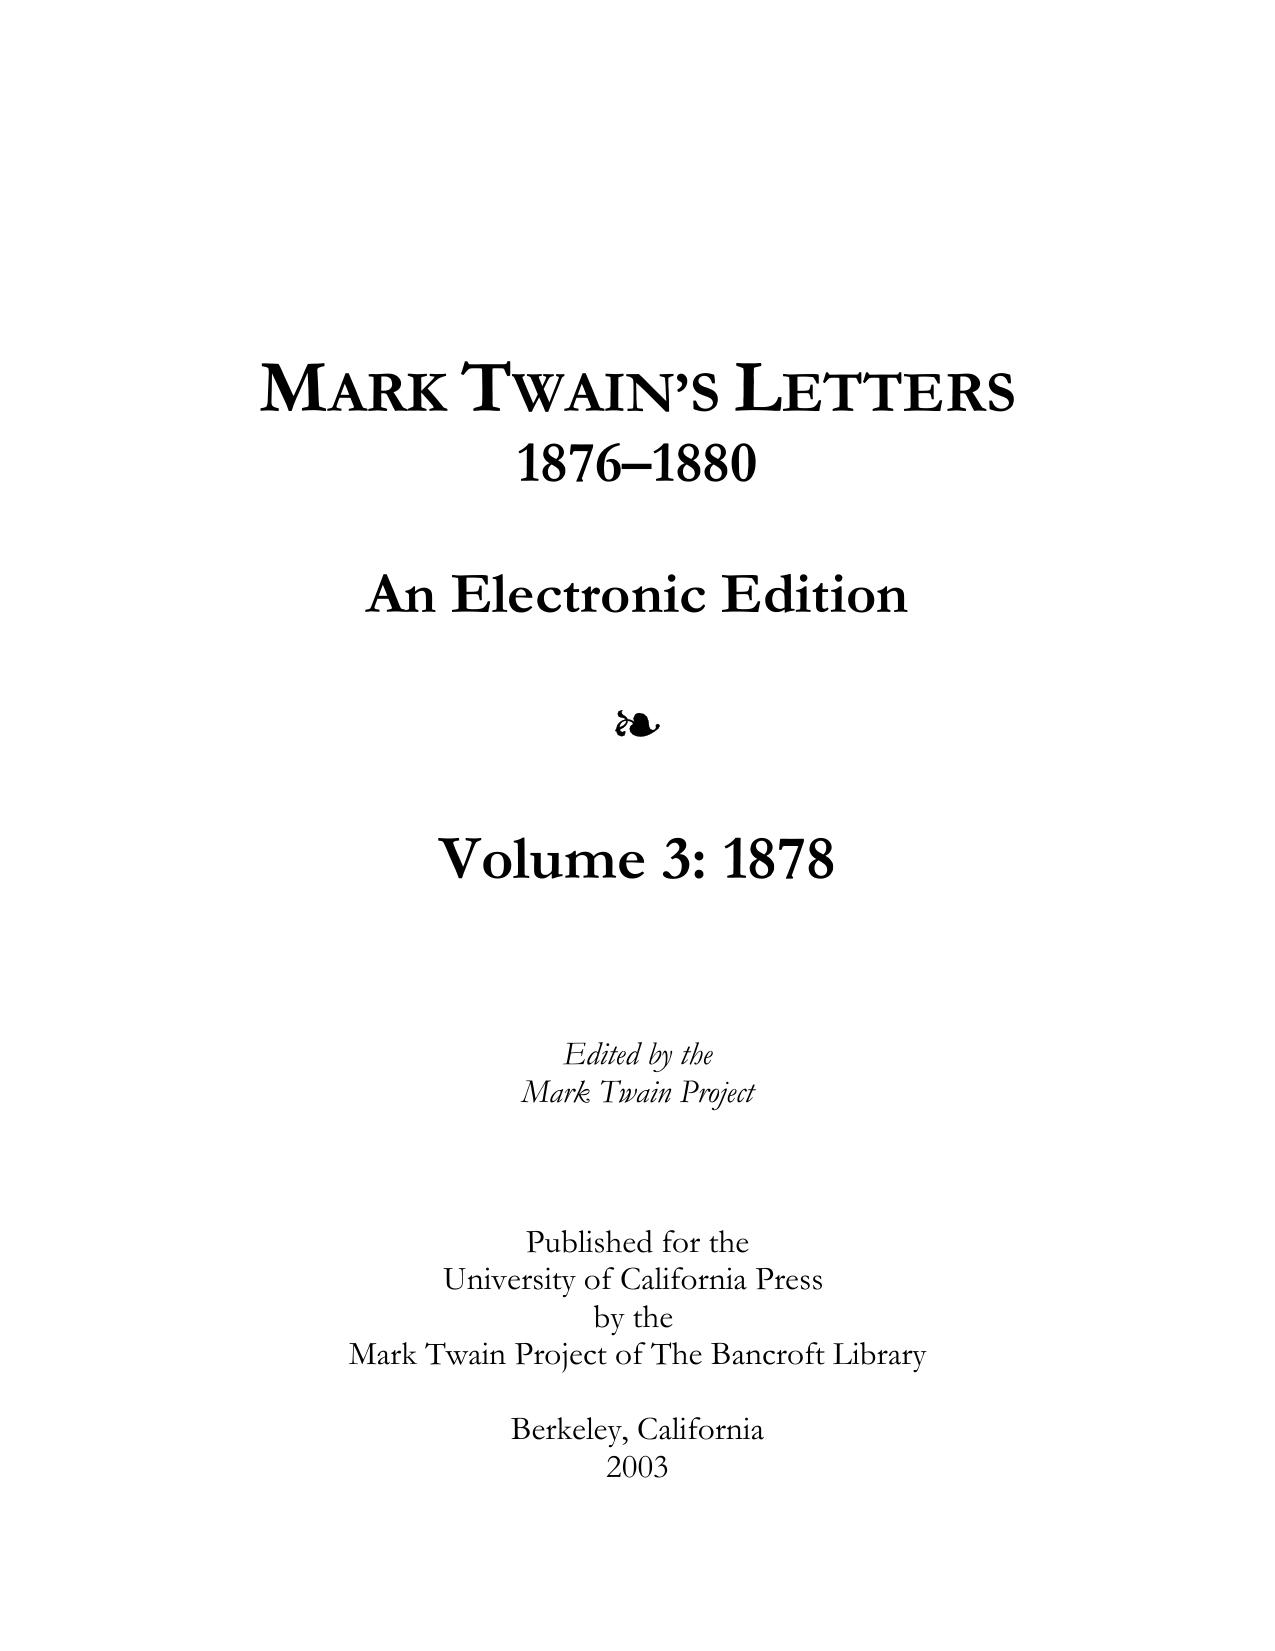 Mark Twain's Letters, 1876-1880, An Electronic Edition, Volume 3: 1878, © 2001 The Mark Twain Foundation